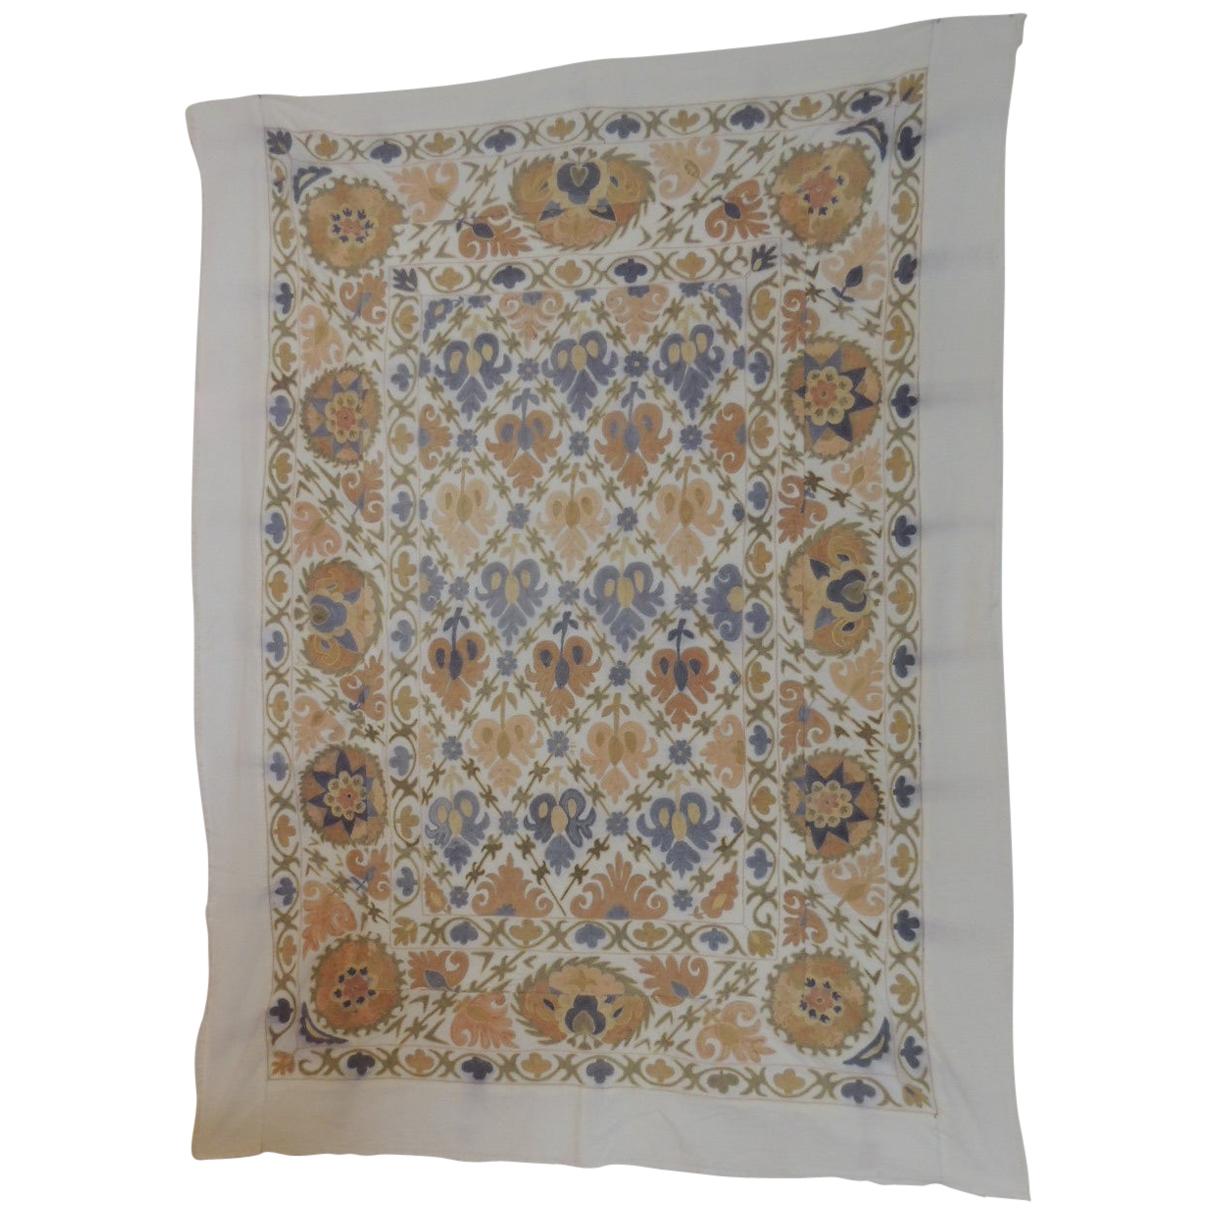 Vintage Peach and Grey Uzbekistan Embroidery Suzani Textile Panel